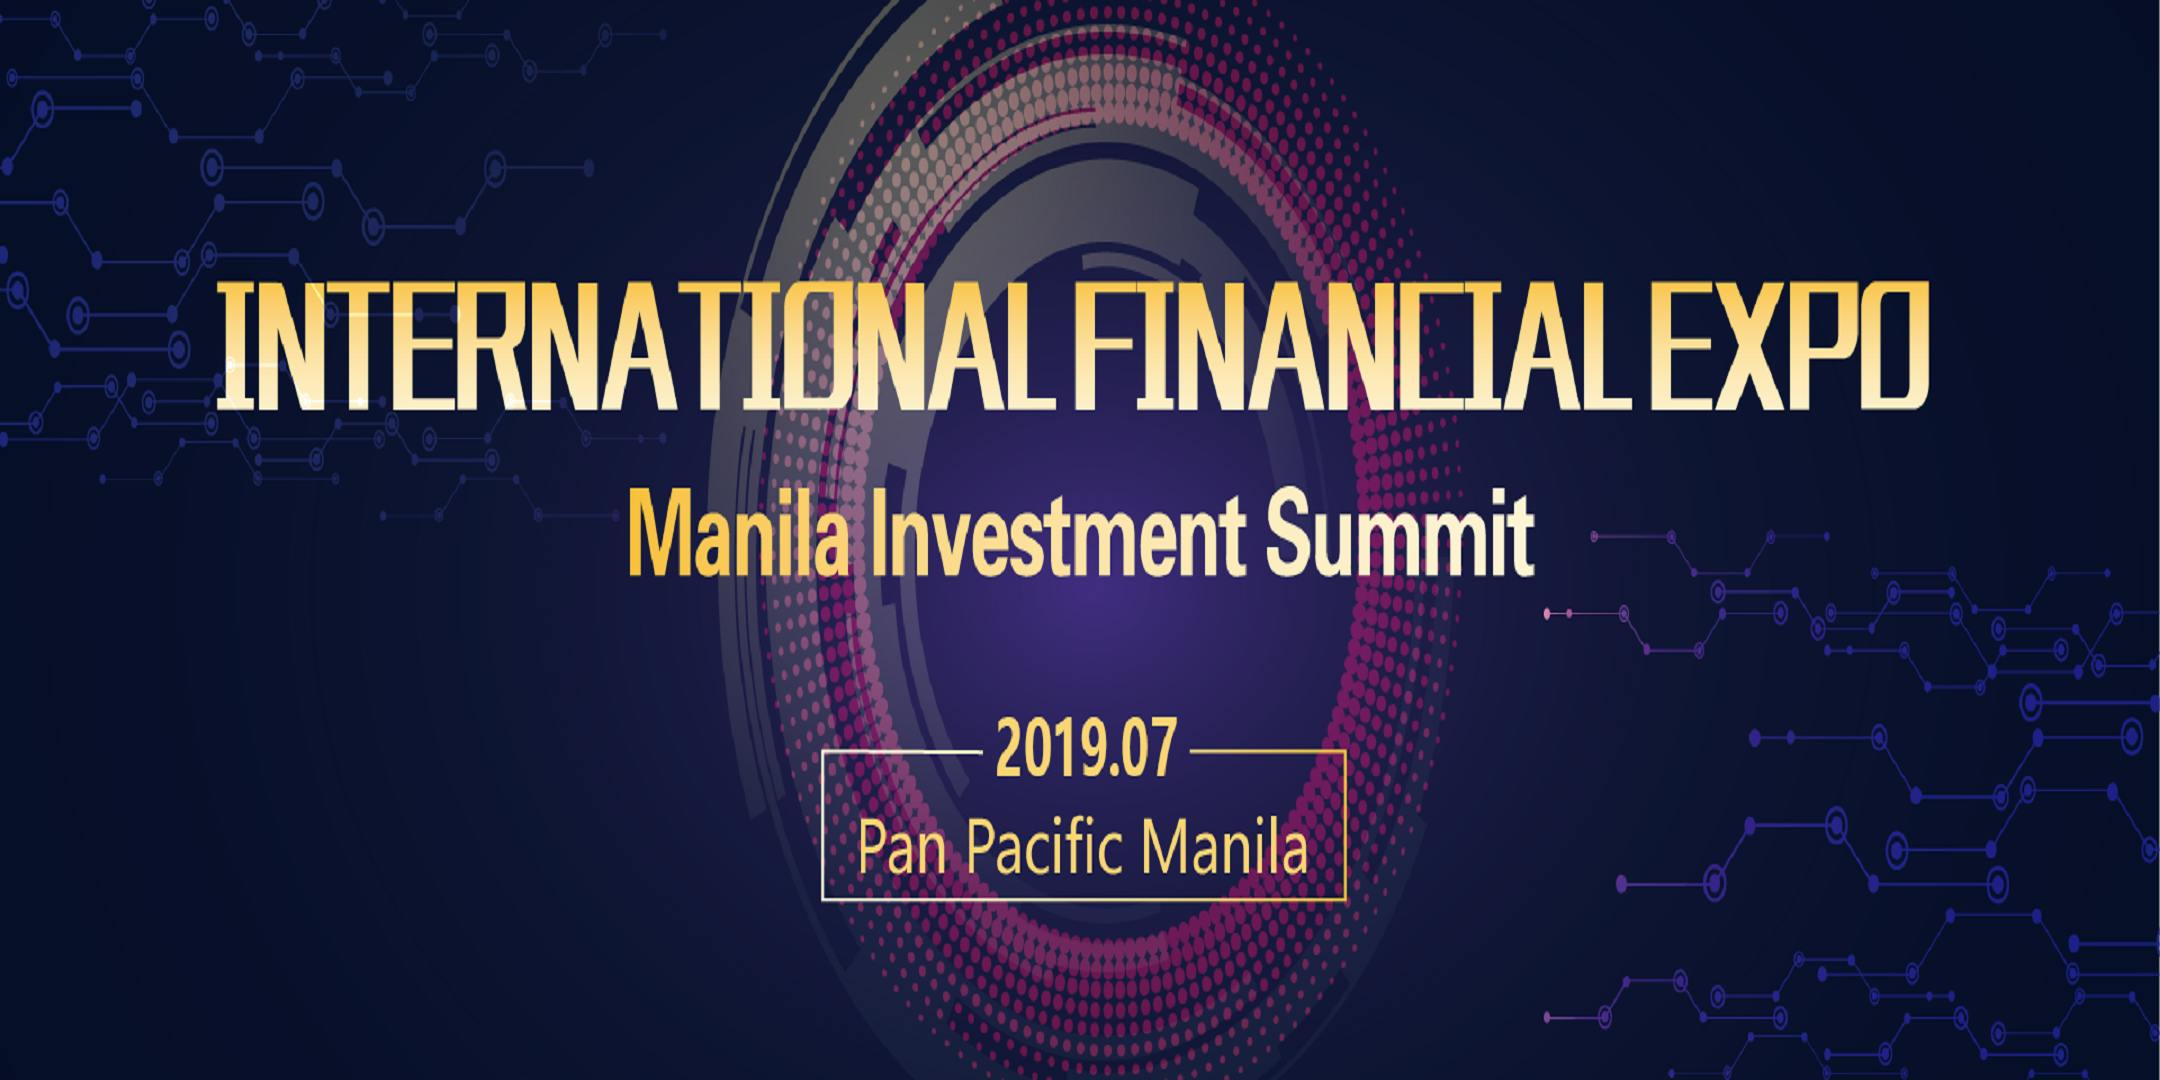 2019 International Financial Expo IFINEXPO Manila Investment Summit